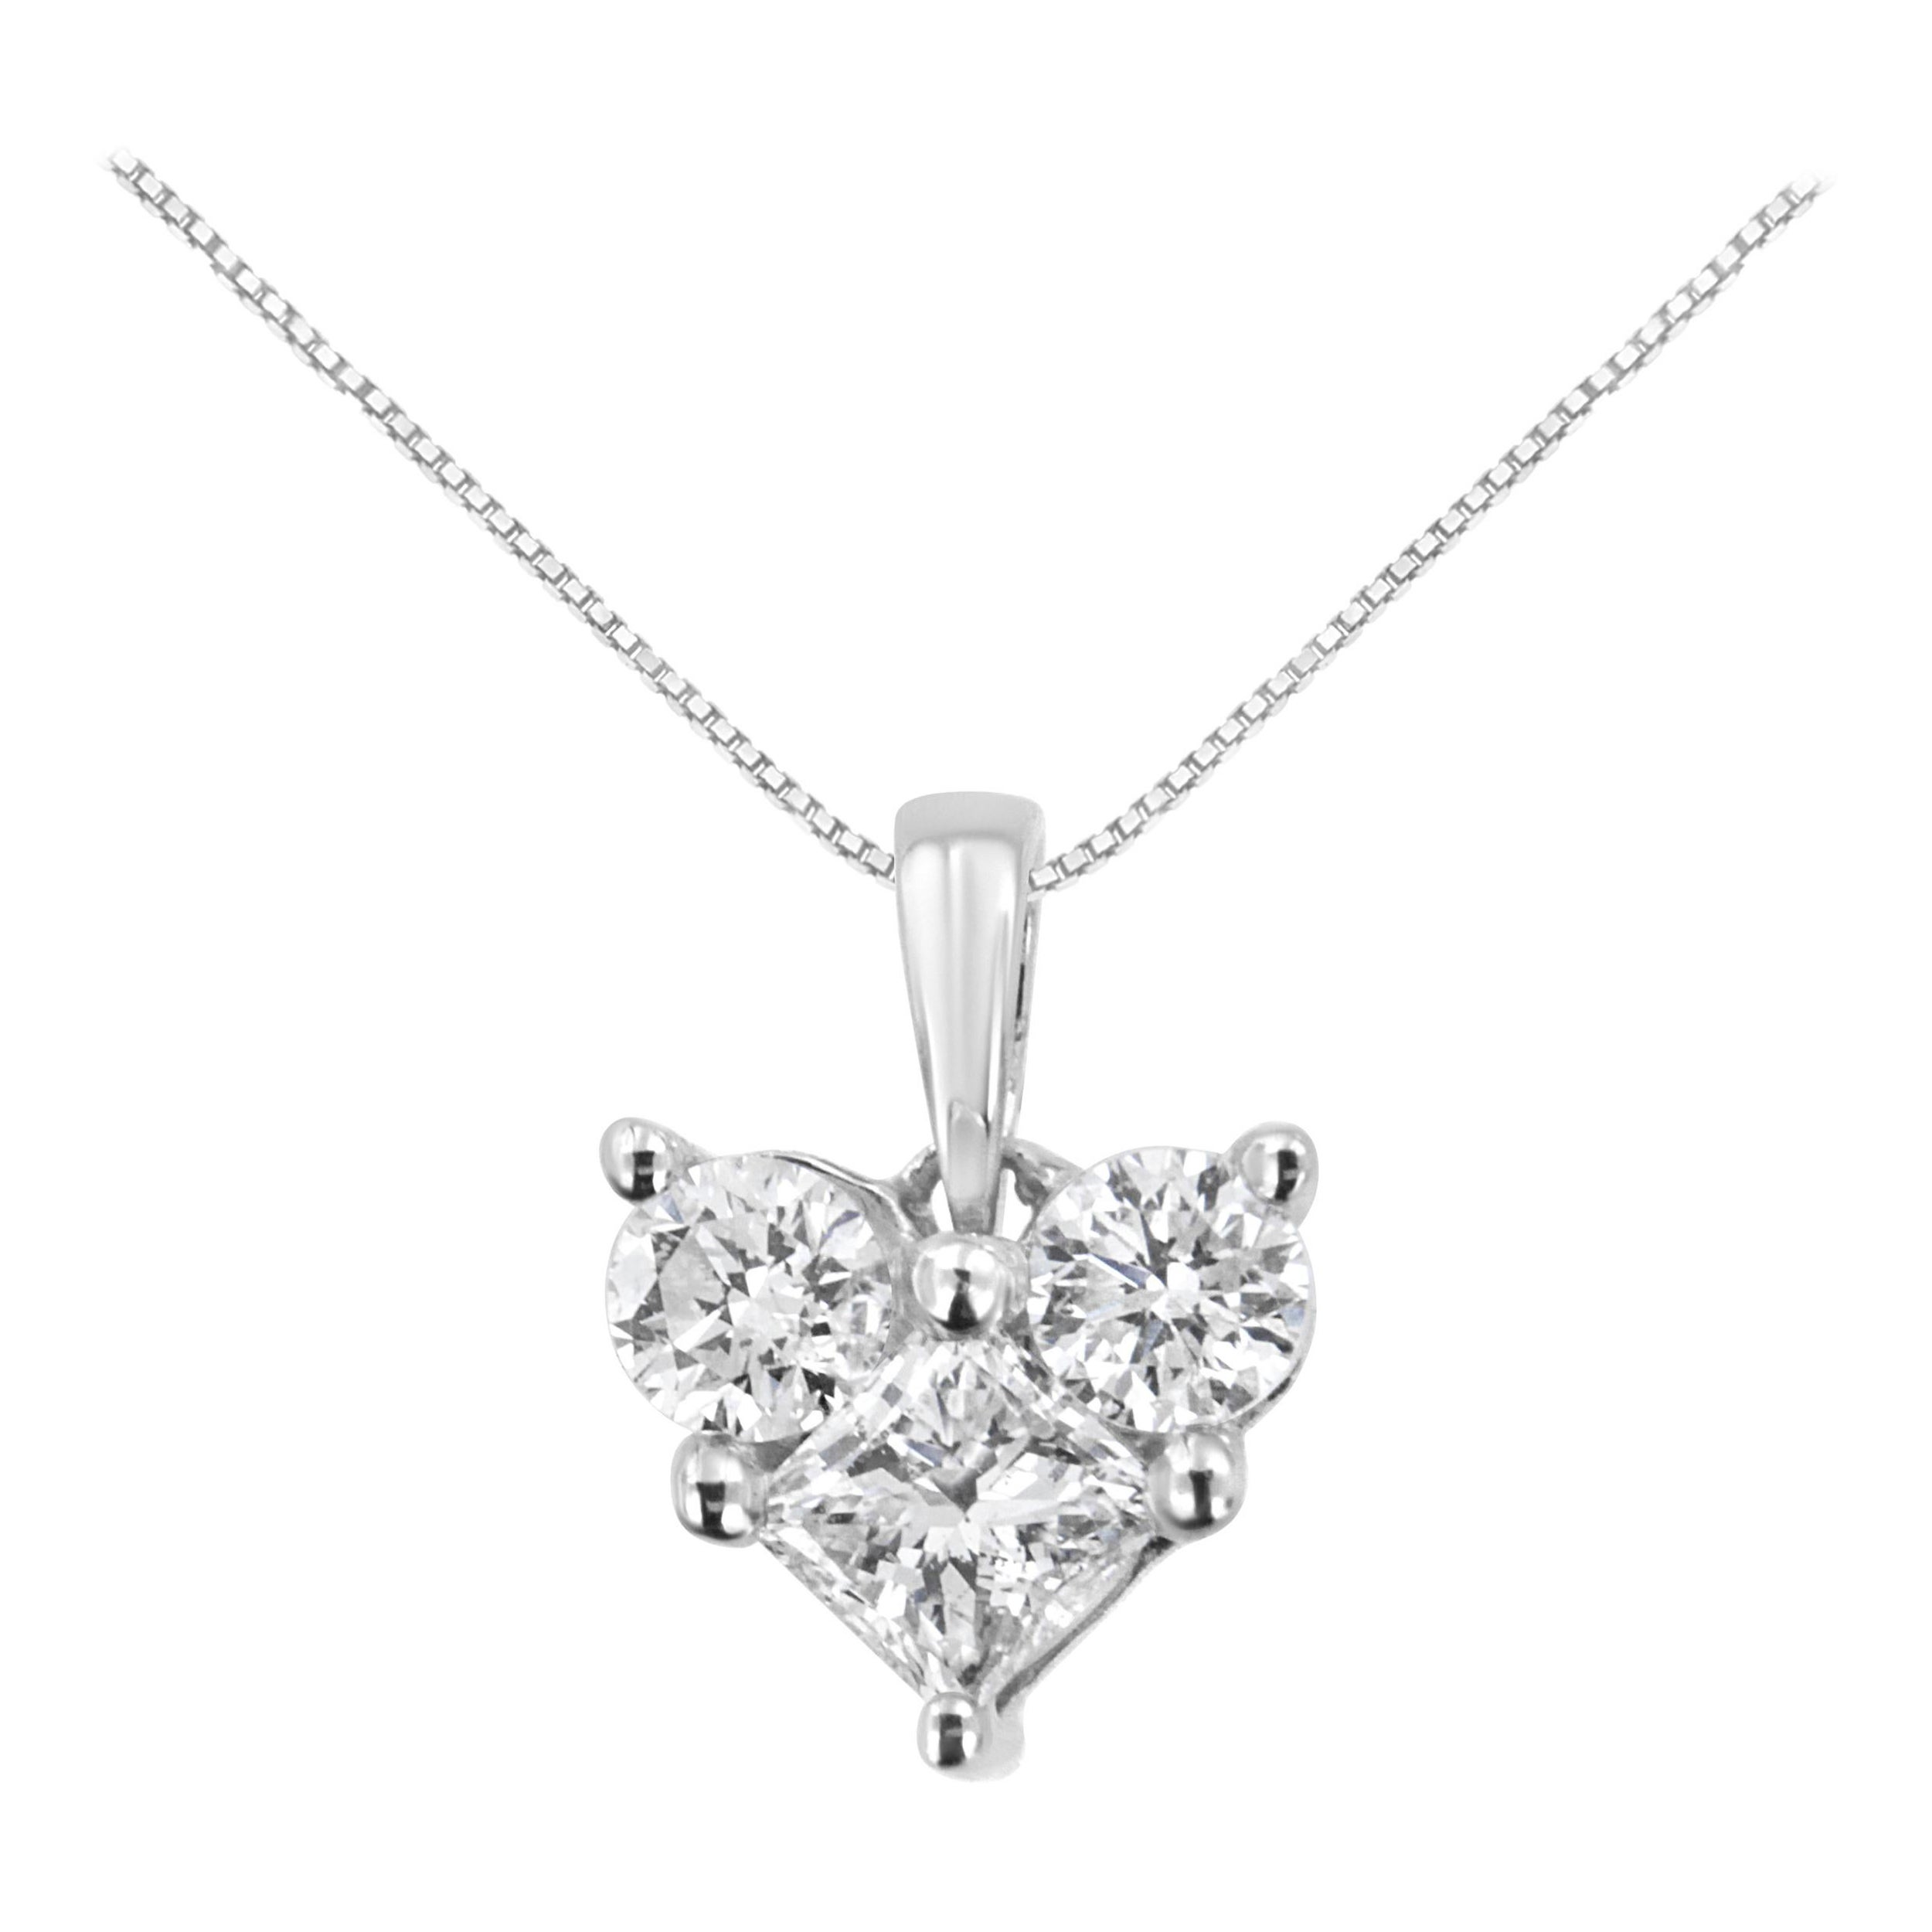 10K White Gold 1/2 Carat Diamond Heart Shape Pendant Necklace